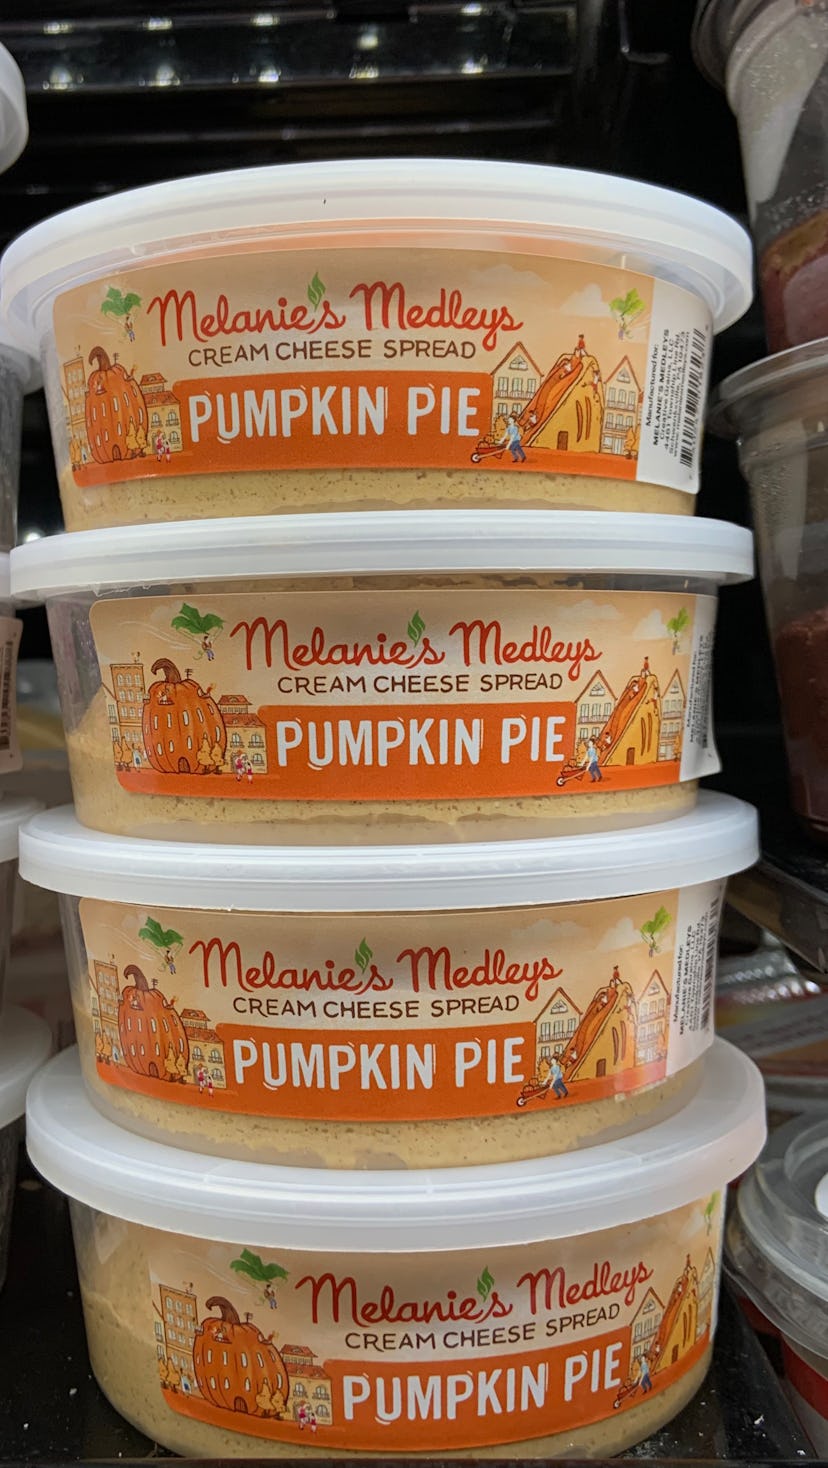 Melanie’s Medleys Pumpkin Pie Cream Cheese Spread from Whole Foods